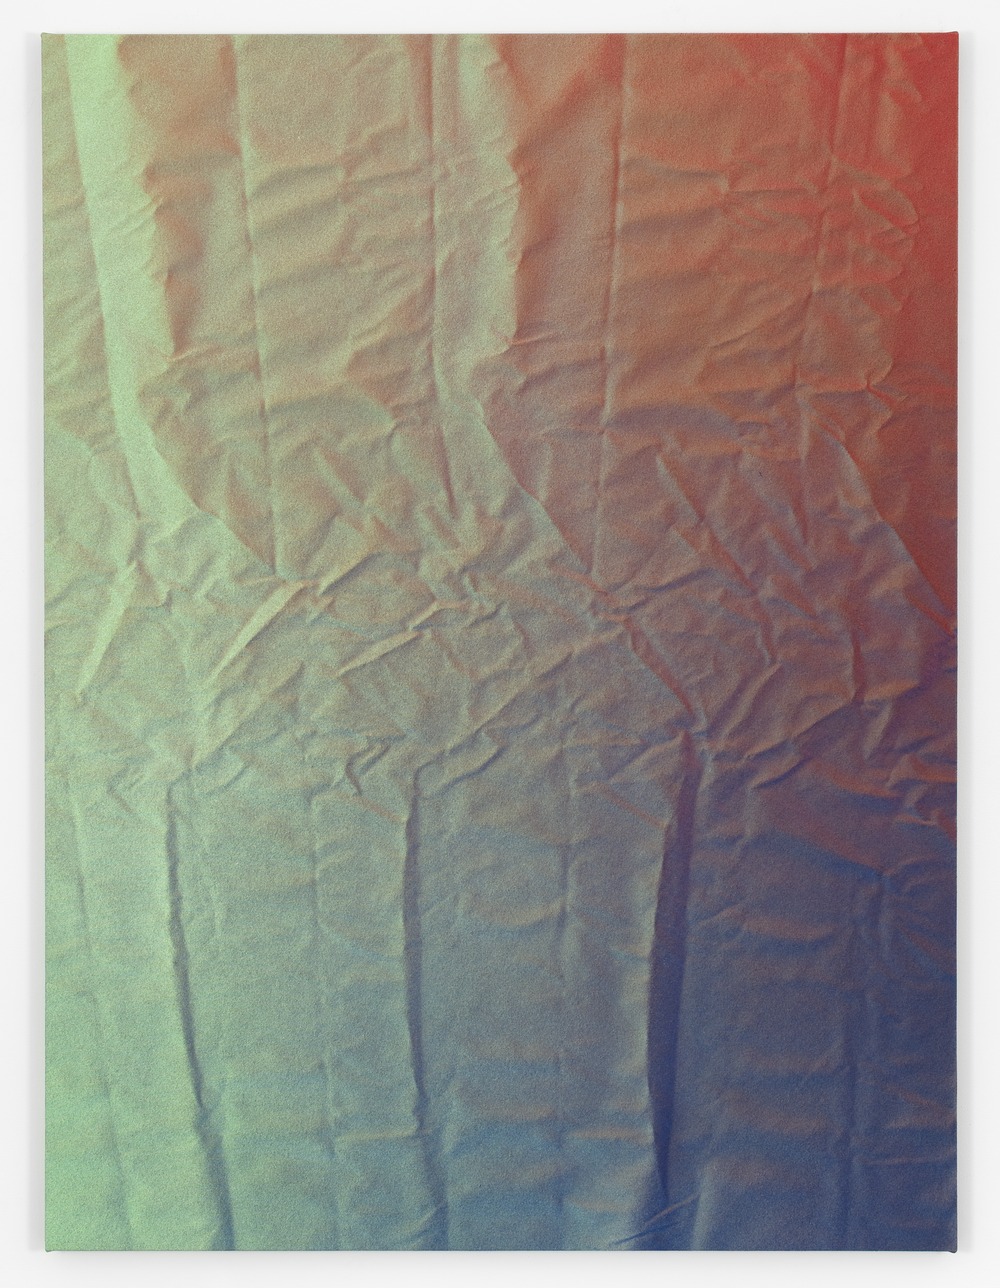 0295 Untitled (Fold)-Tauba-Auerbach-large